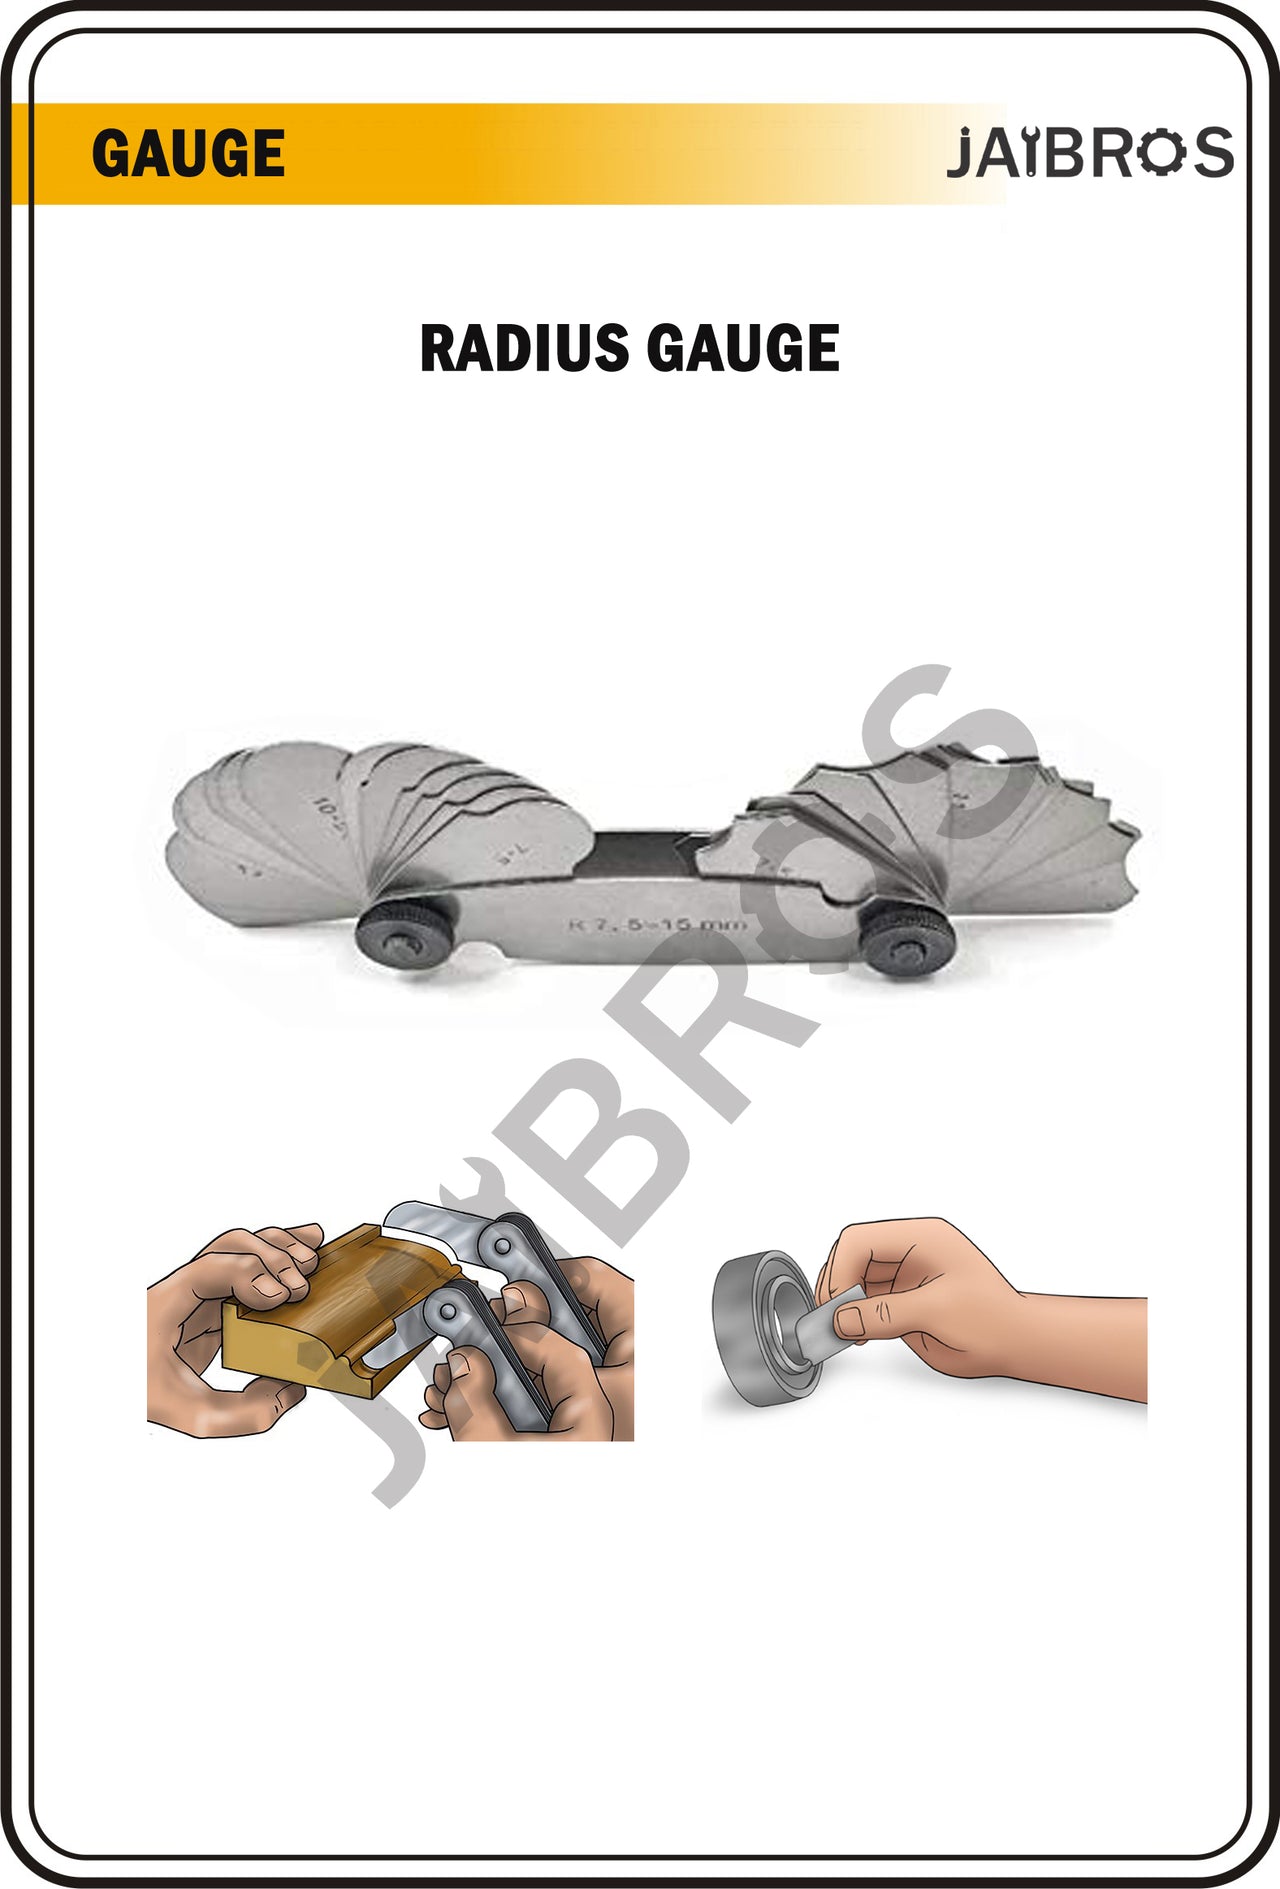 Radius gauge 7.5-15 mm